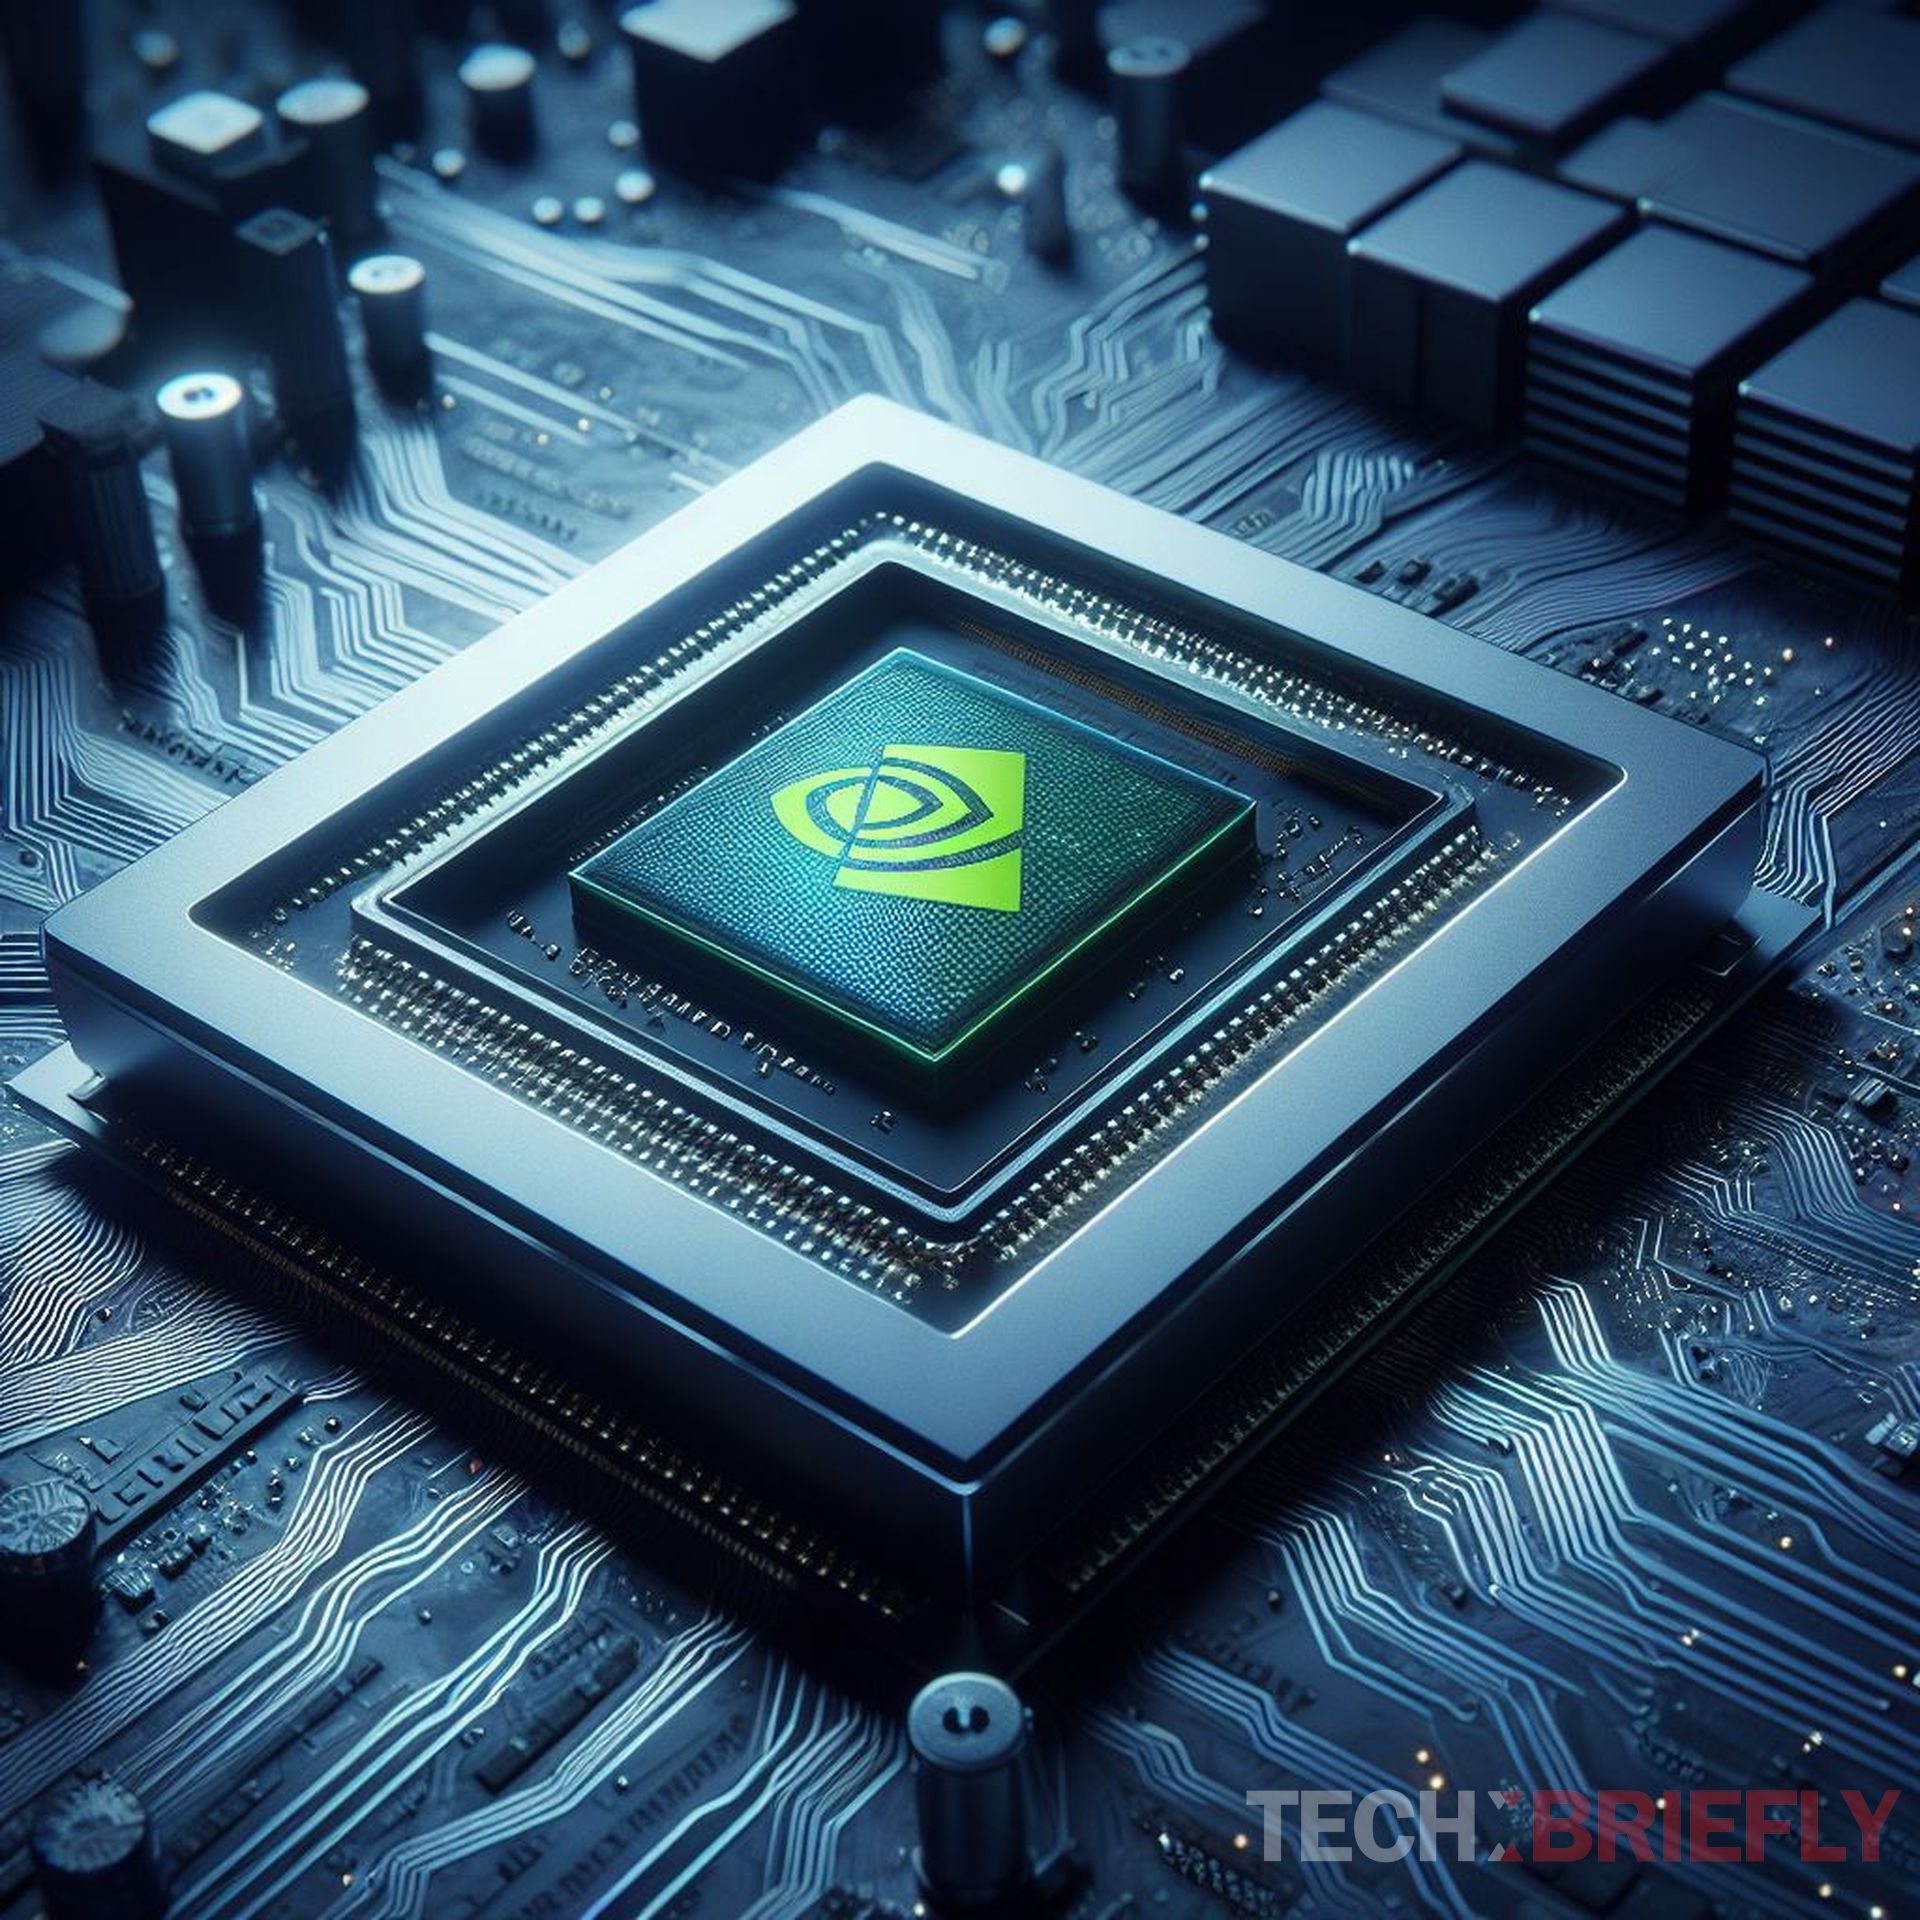 CEO van Nvidia maakt prijs van nieuwe AI Blackwell-chip bekend